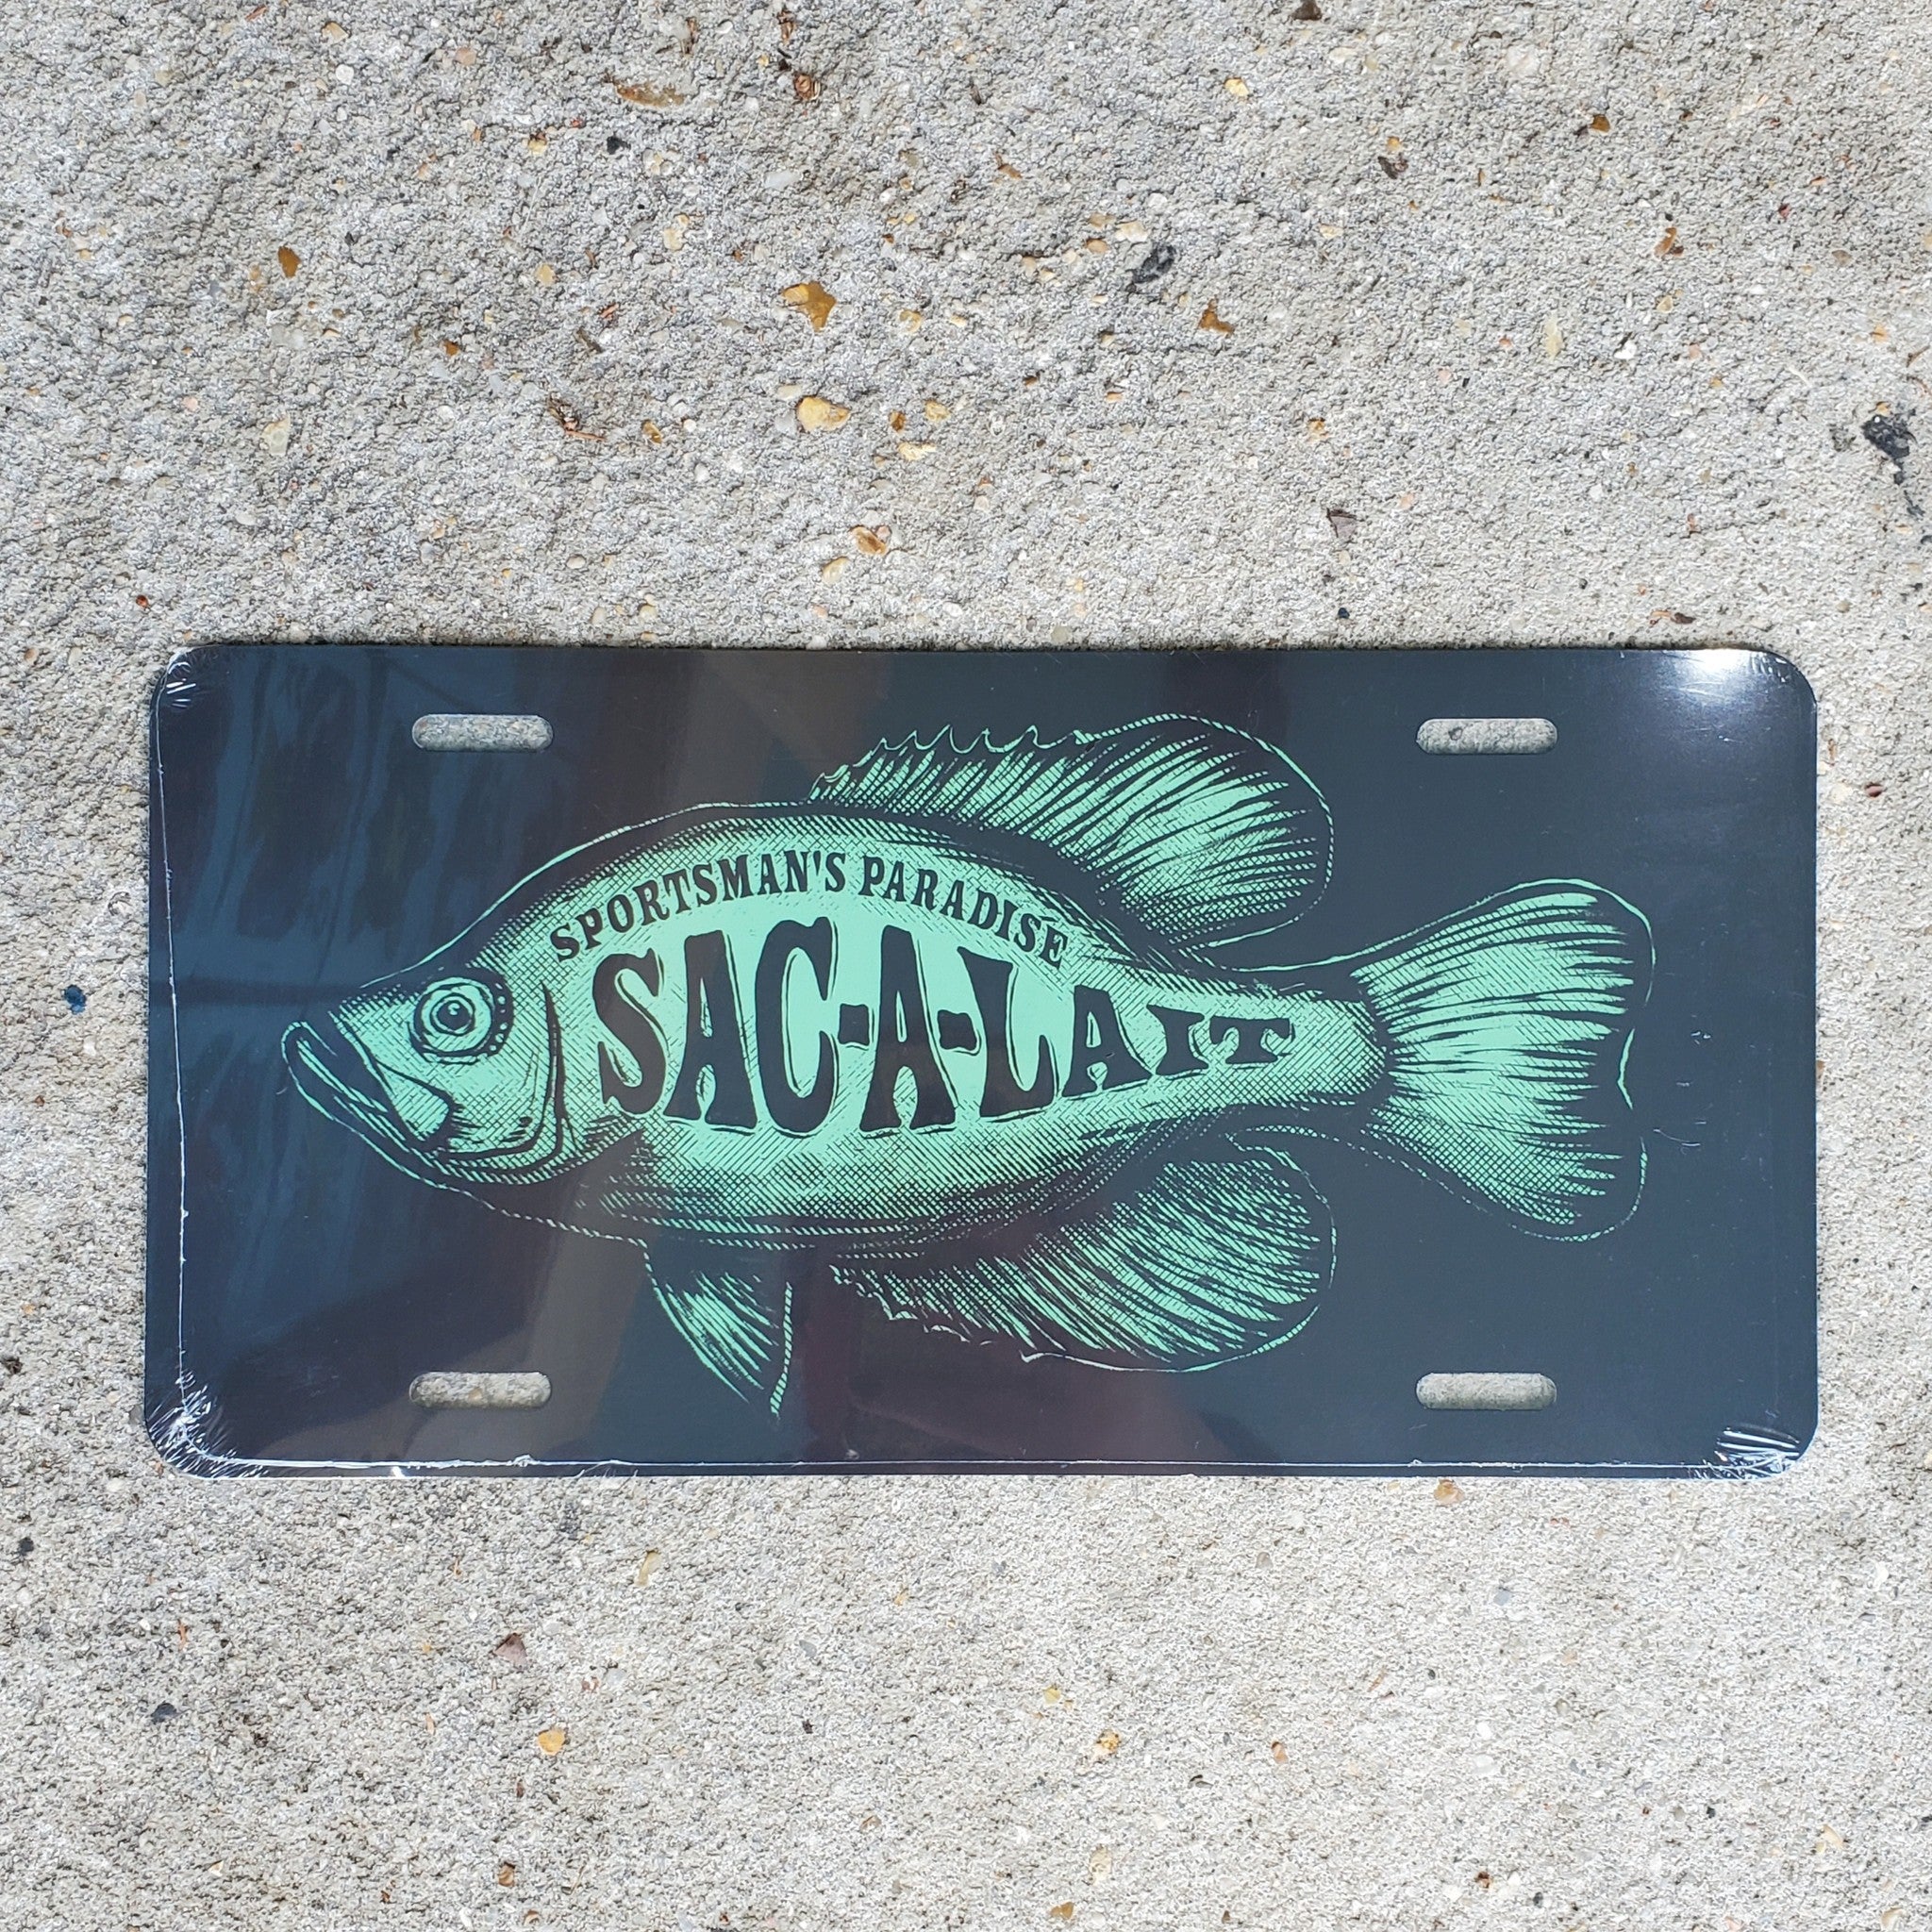 sac-a-lait-license-plate